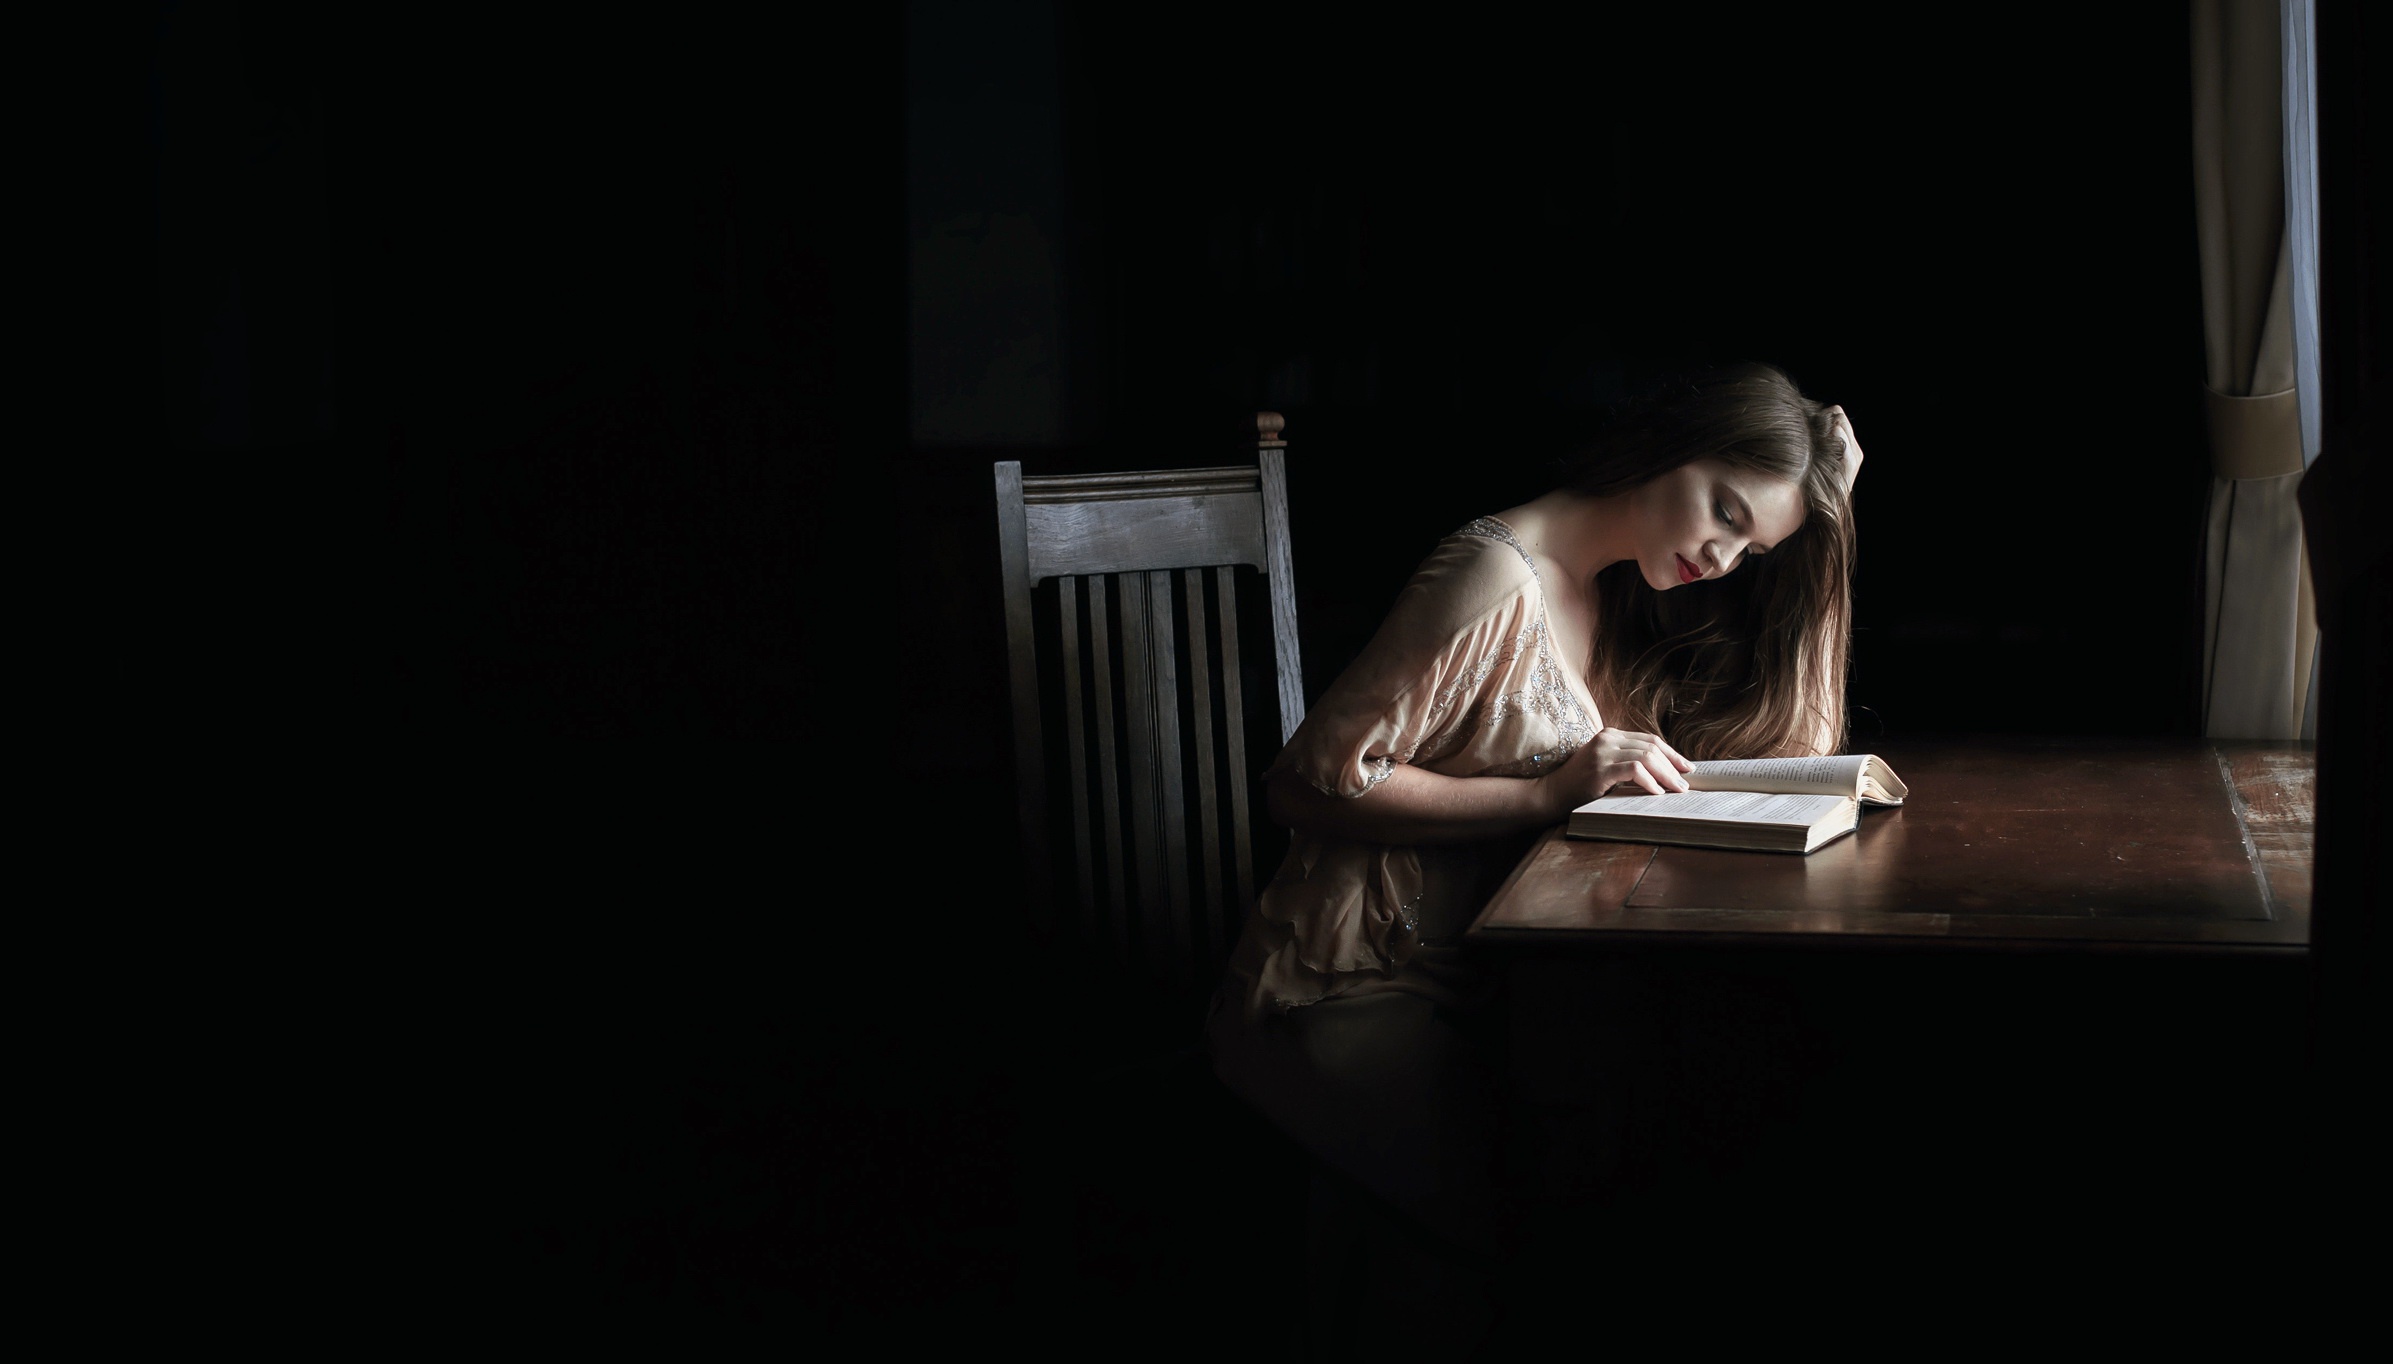 Книги полная темнота. Девушка в темной комнате. Девушка с книгой. Девушка в полумраке. Девочка в темной комнате.